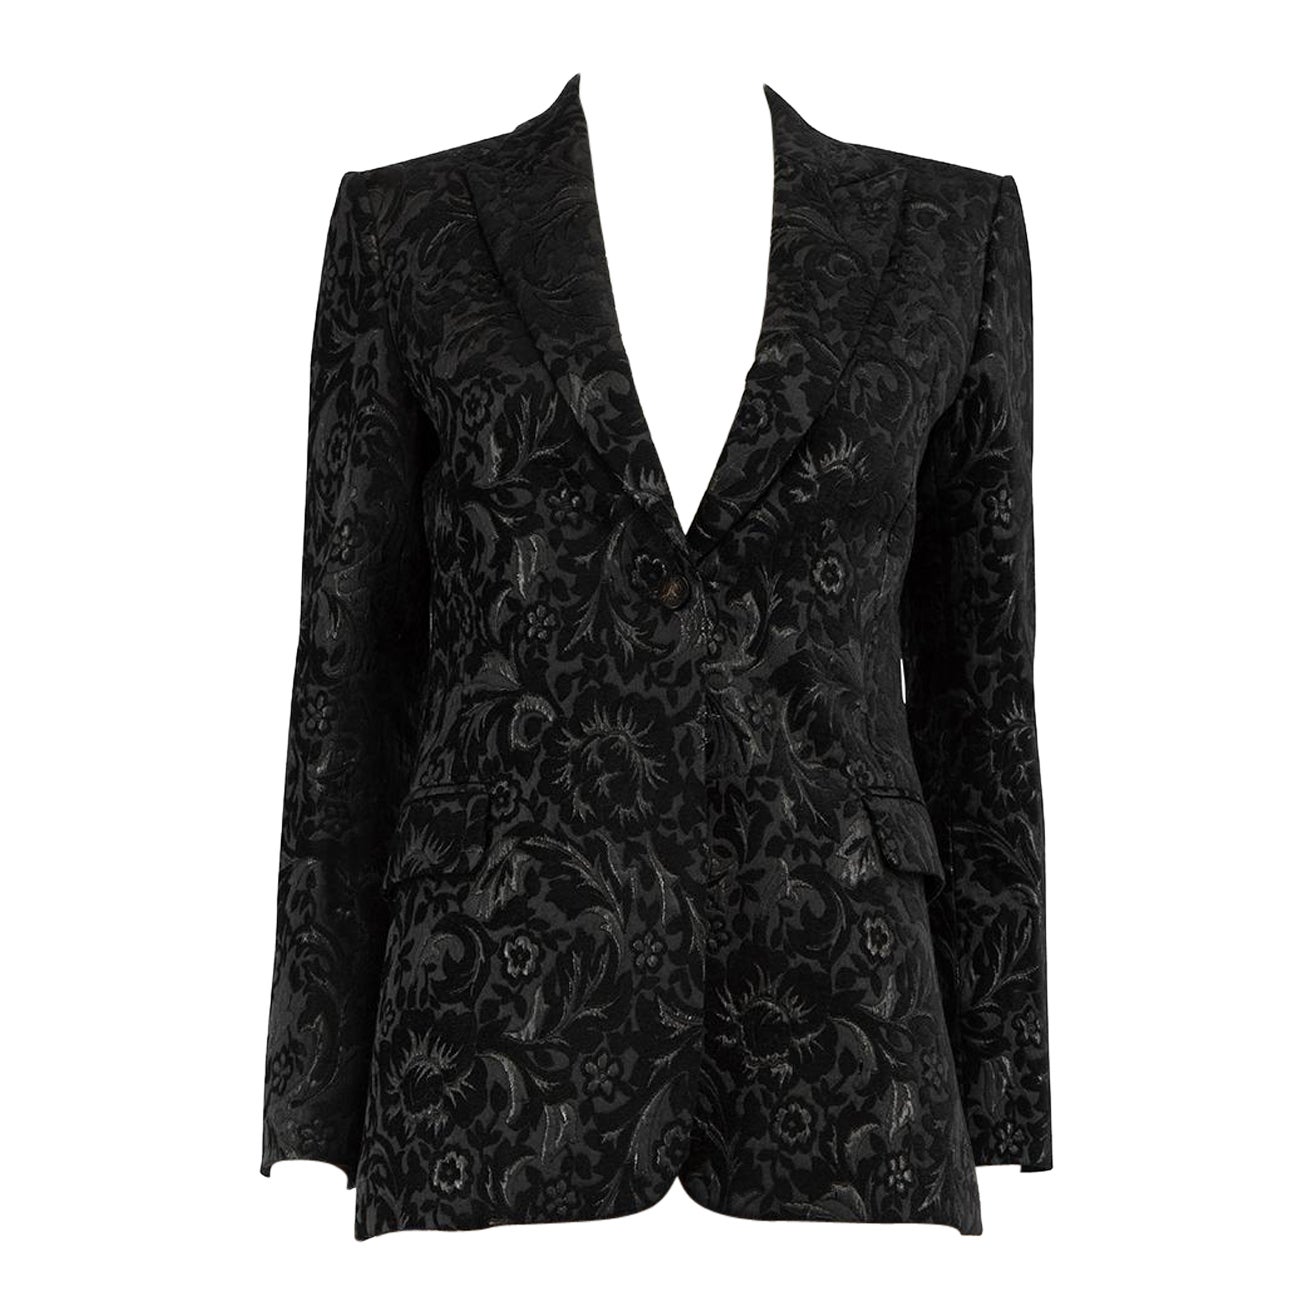 Gucci Black Floral Jacquard Blazer Jacket Size S For Sale